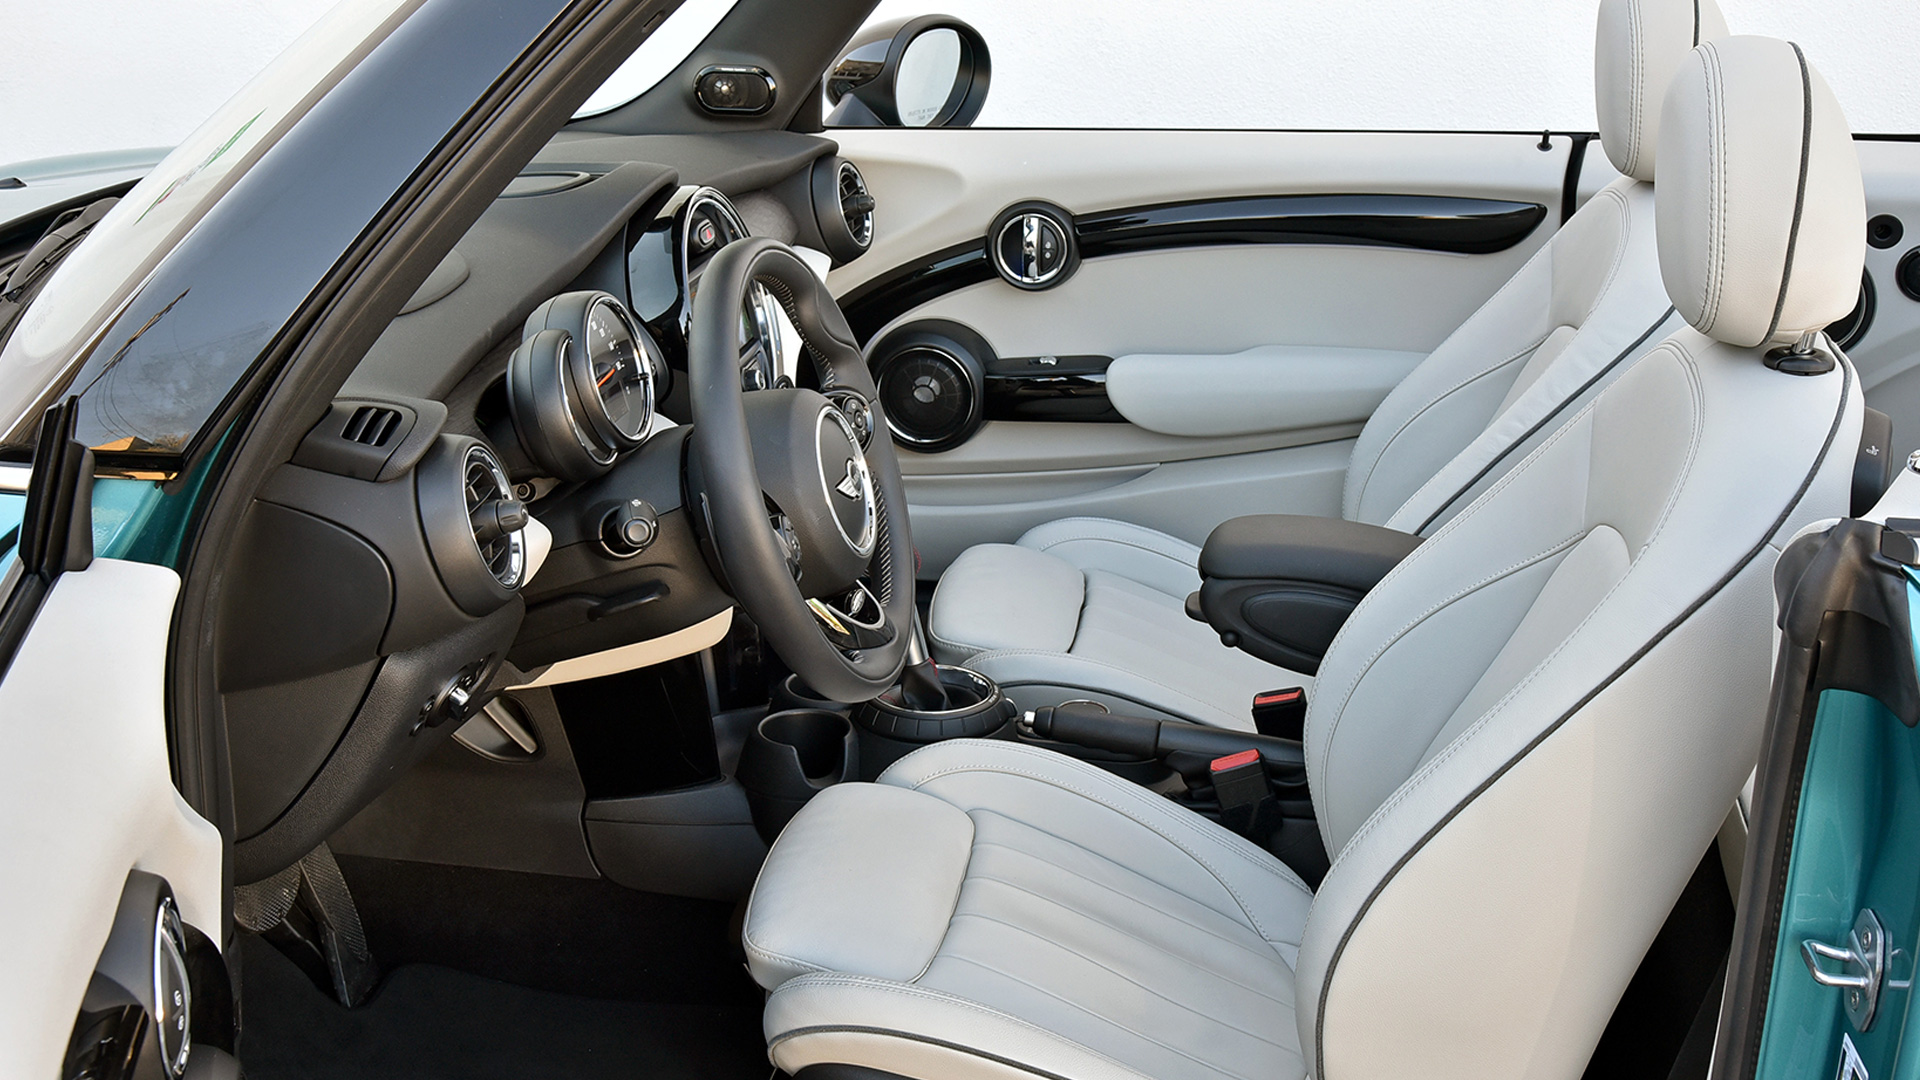 Mini Cooper 2016 Convertible Interior Car Photos Overdrive